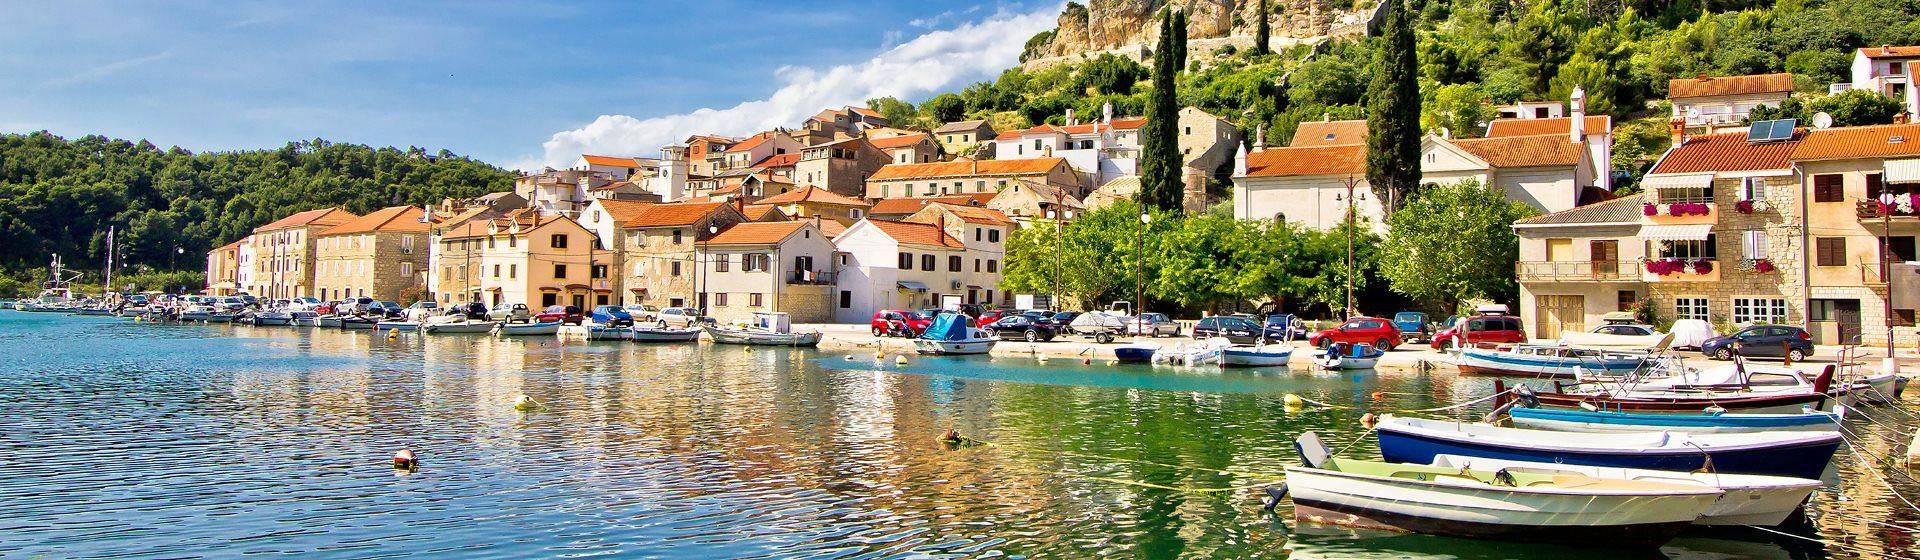 Holidays to Dalmatian Riviera Image